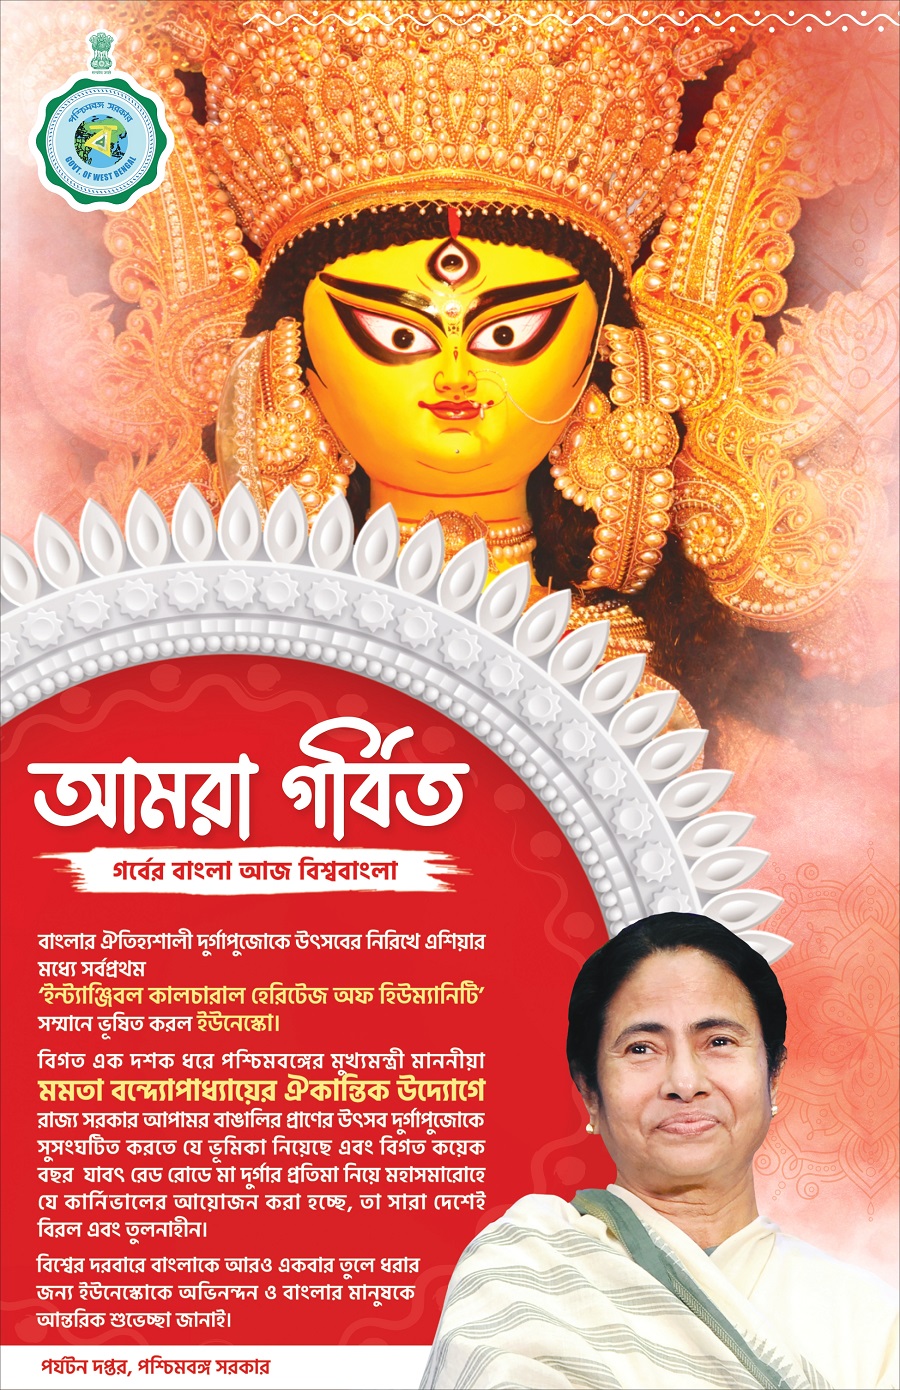 UNESCO Honours Durga Puja